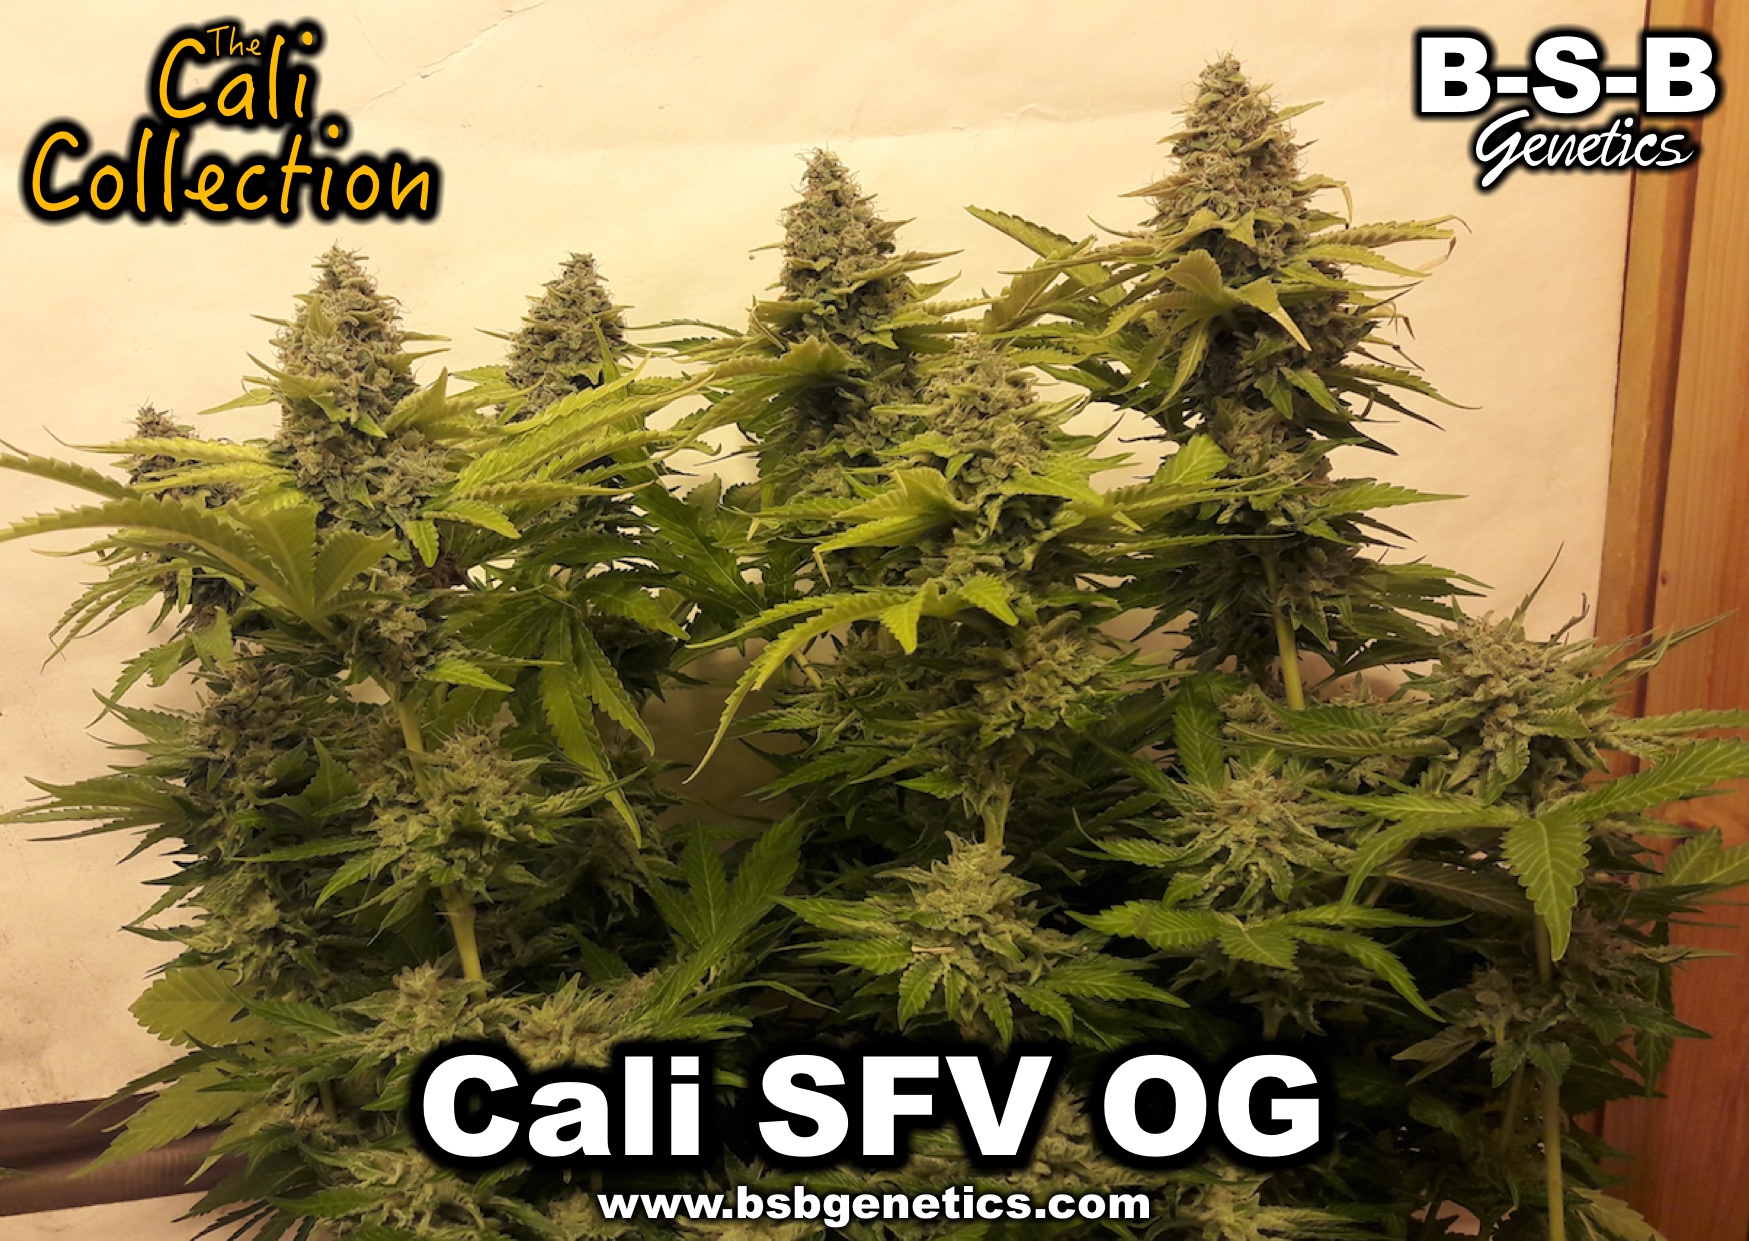 SALE - Cali SFV OG - BSB Genetics - Cannabis Seed Sale Items